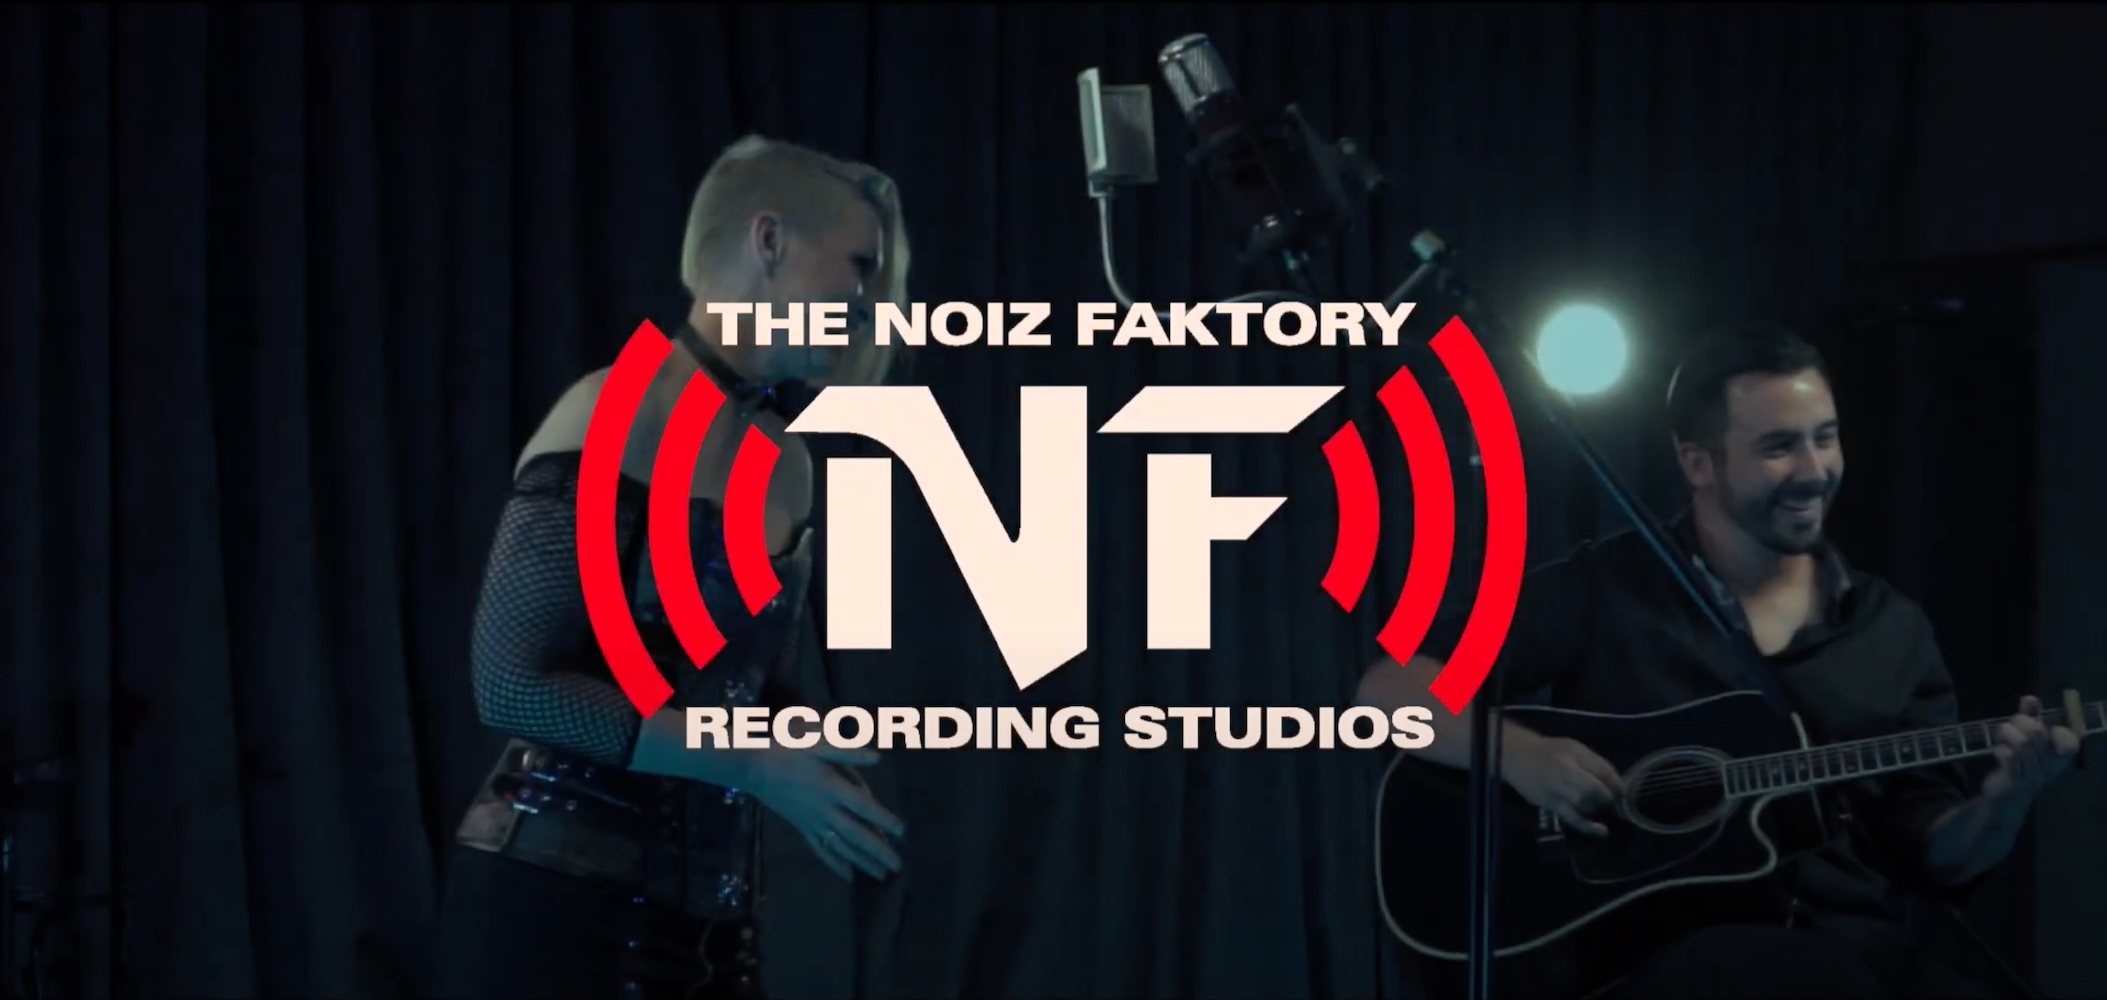 VIDEO - Alex Winters Performs "Black Roses" at Noiz Faktory Recording Studios